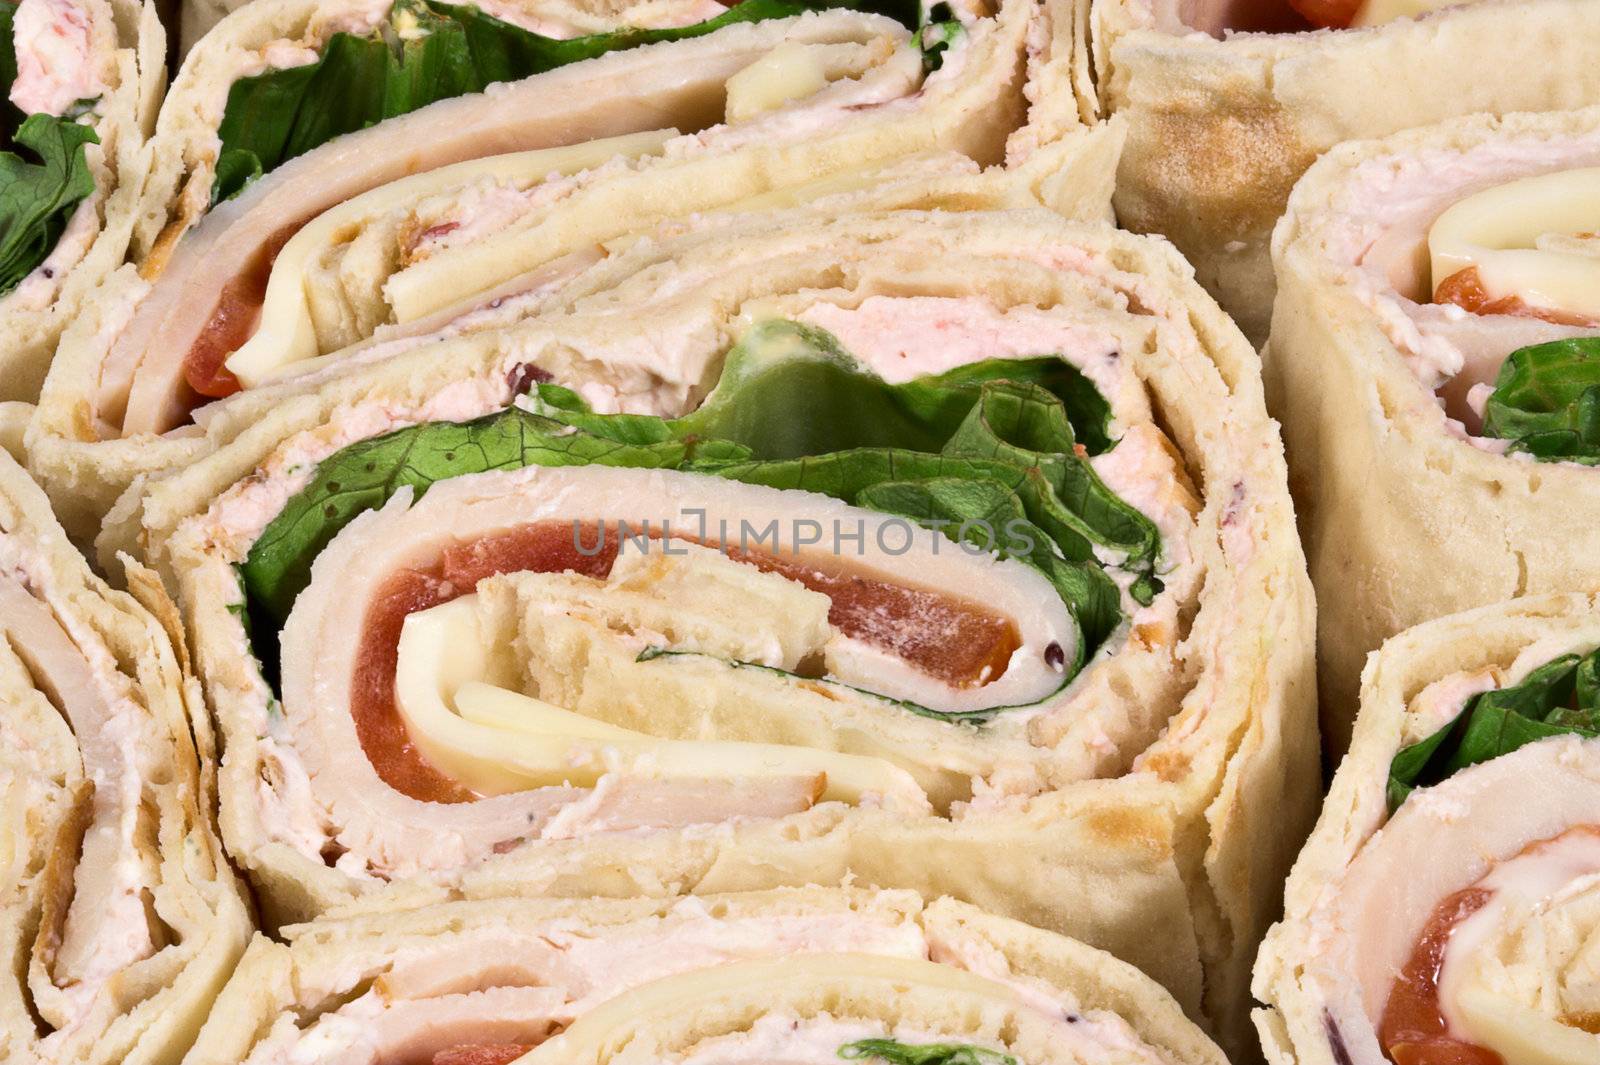 A sliced turkey wrap sandwich